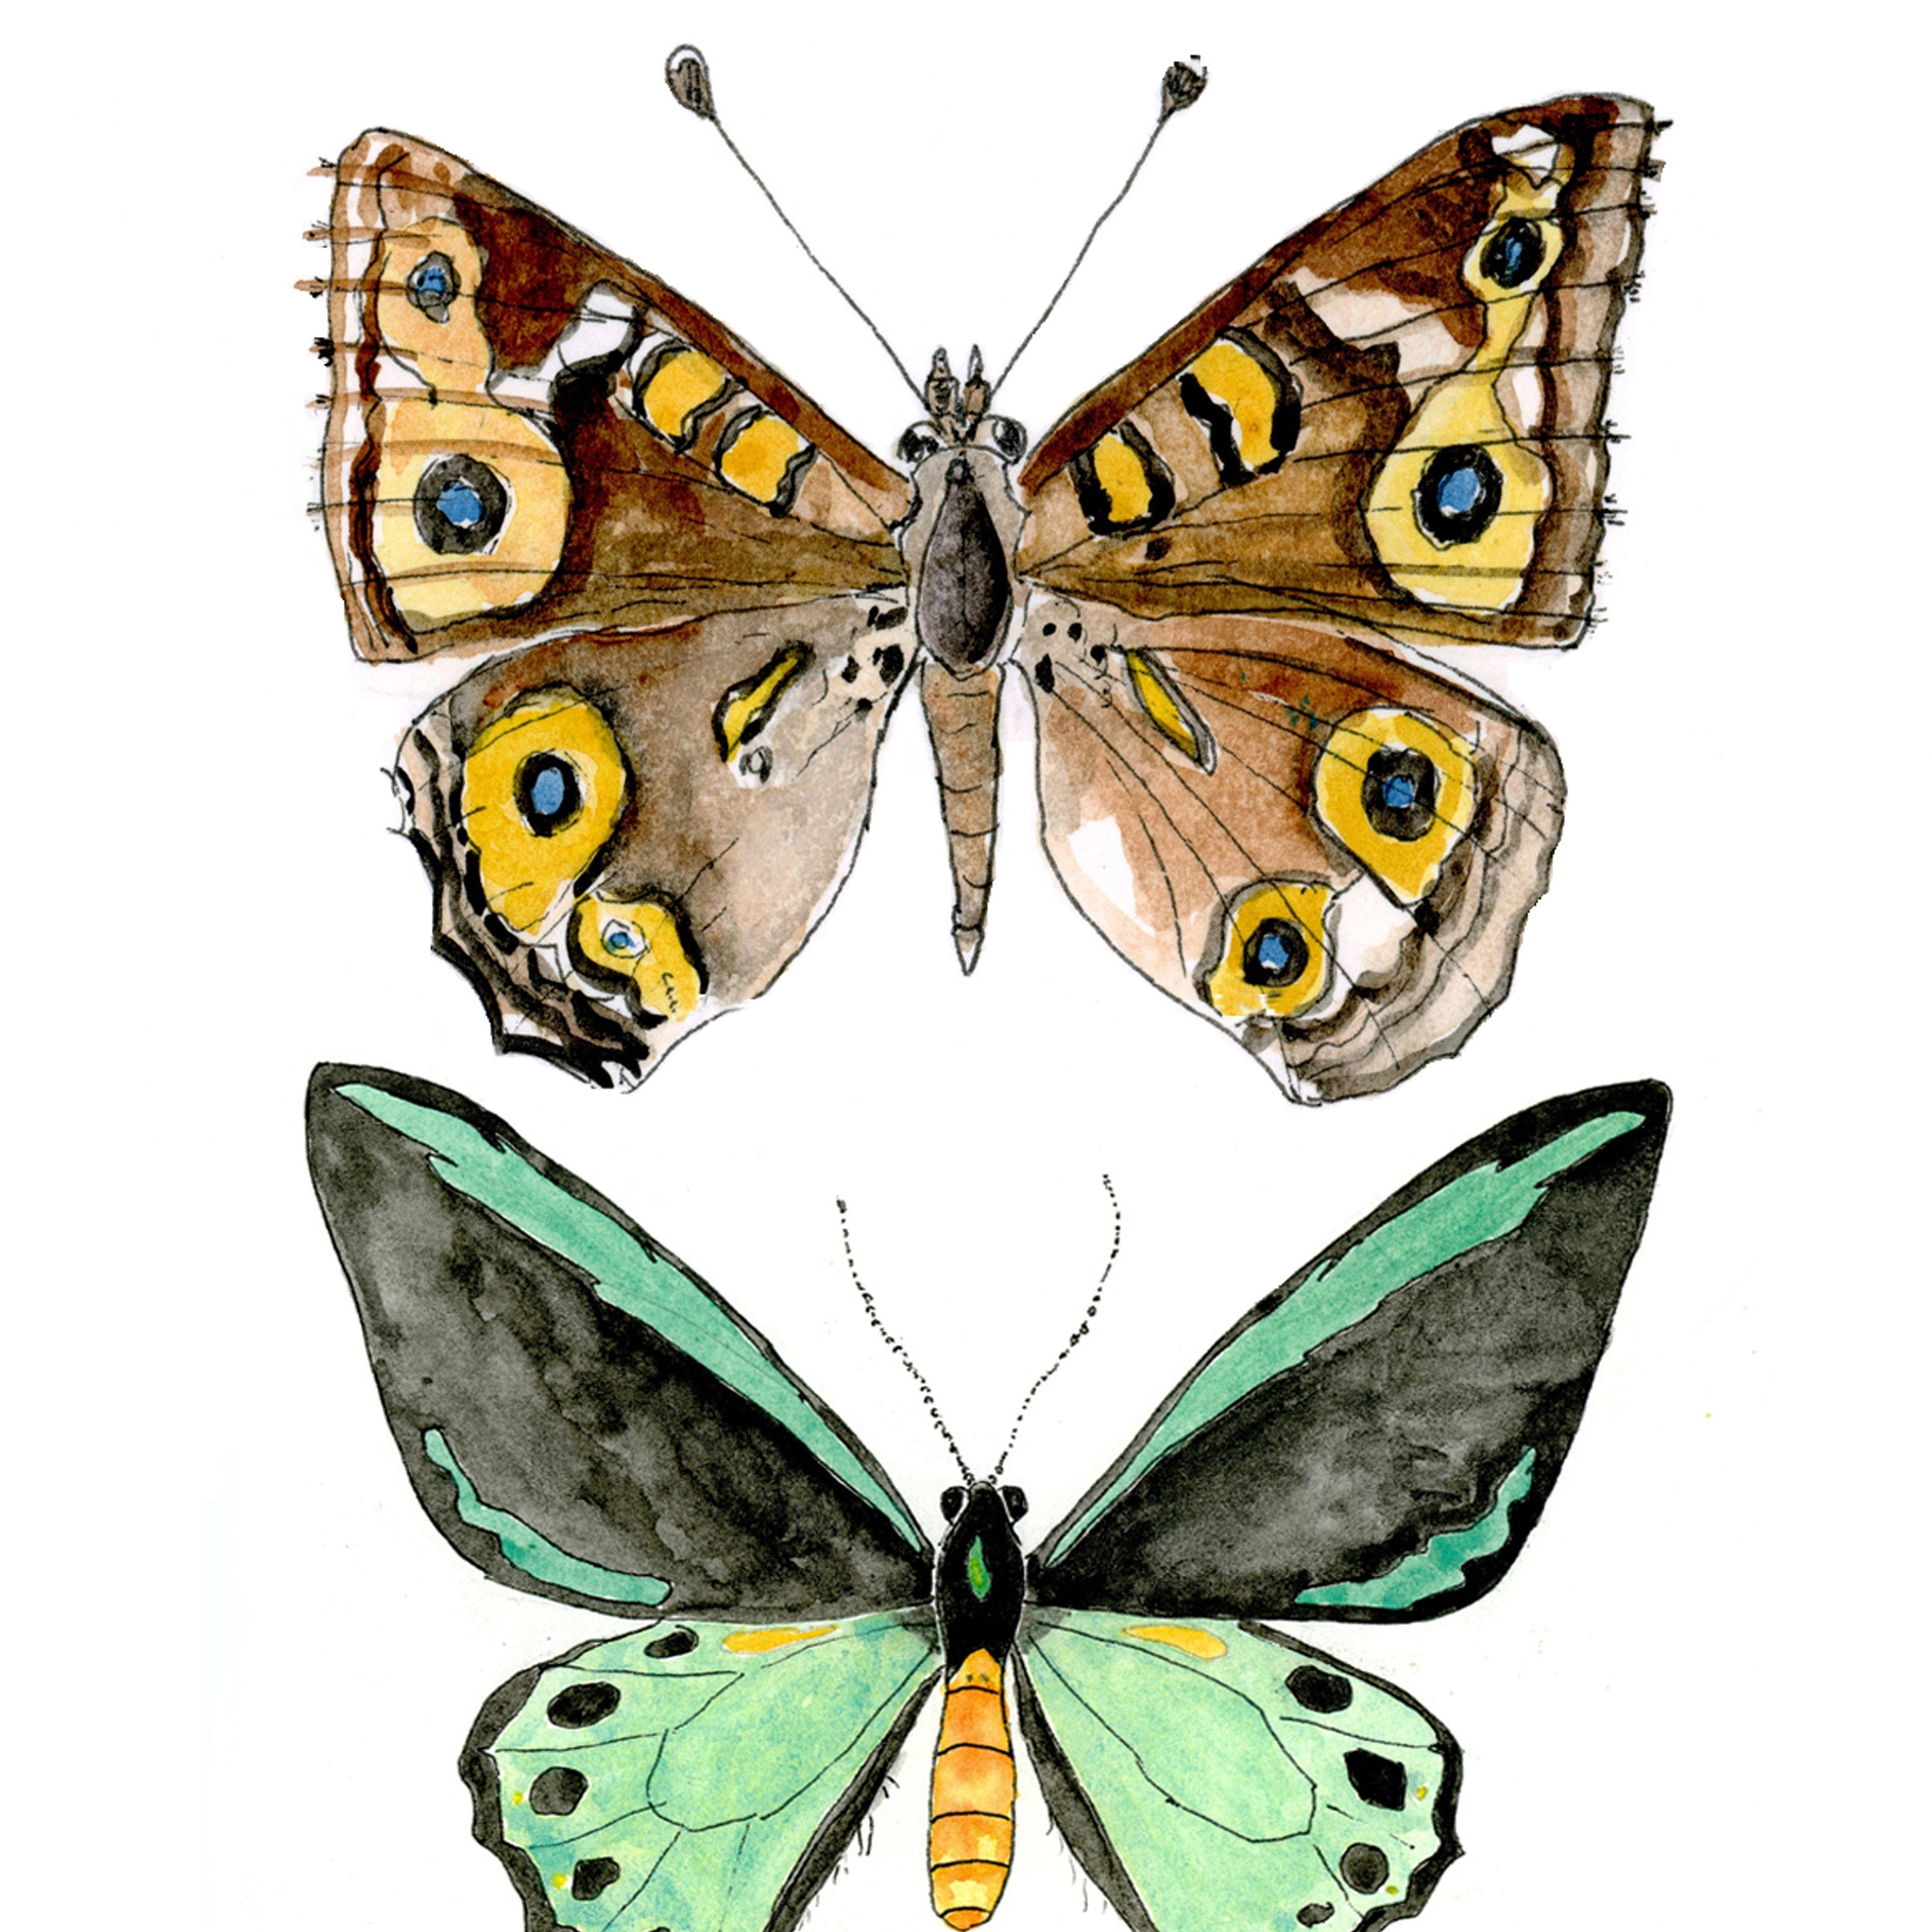 Butterfly print with endangered Richmond Birdwing